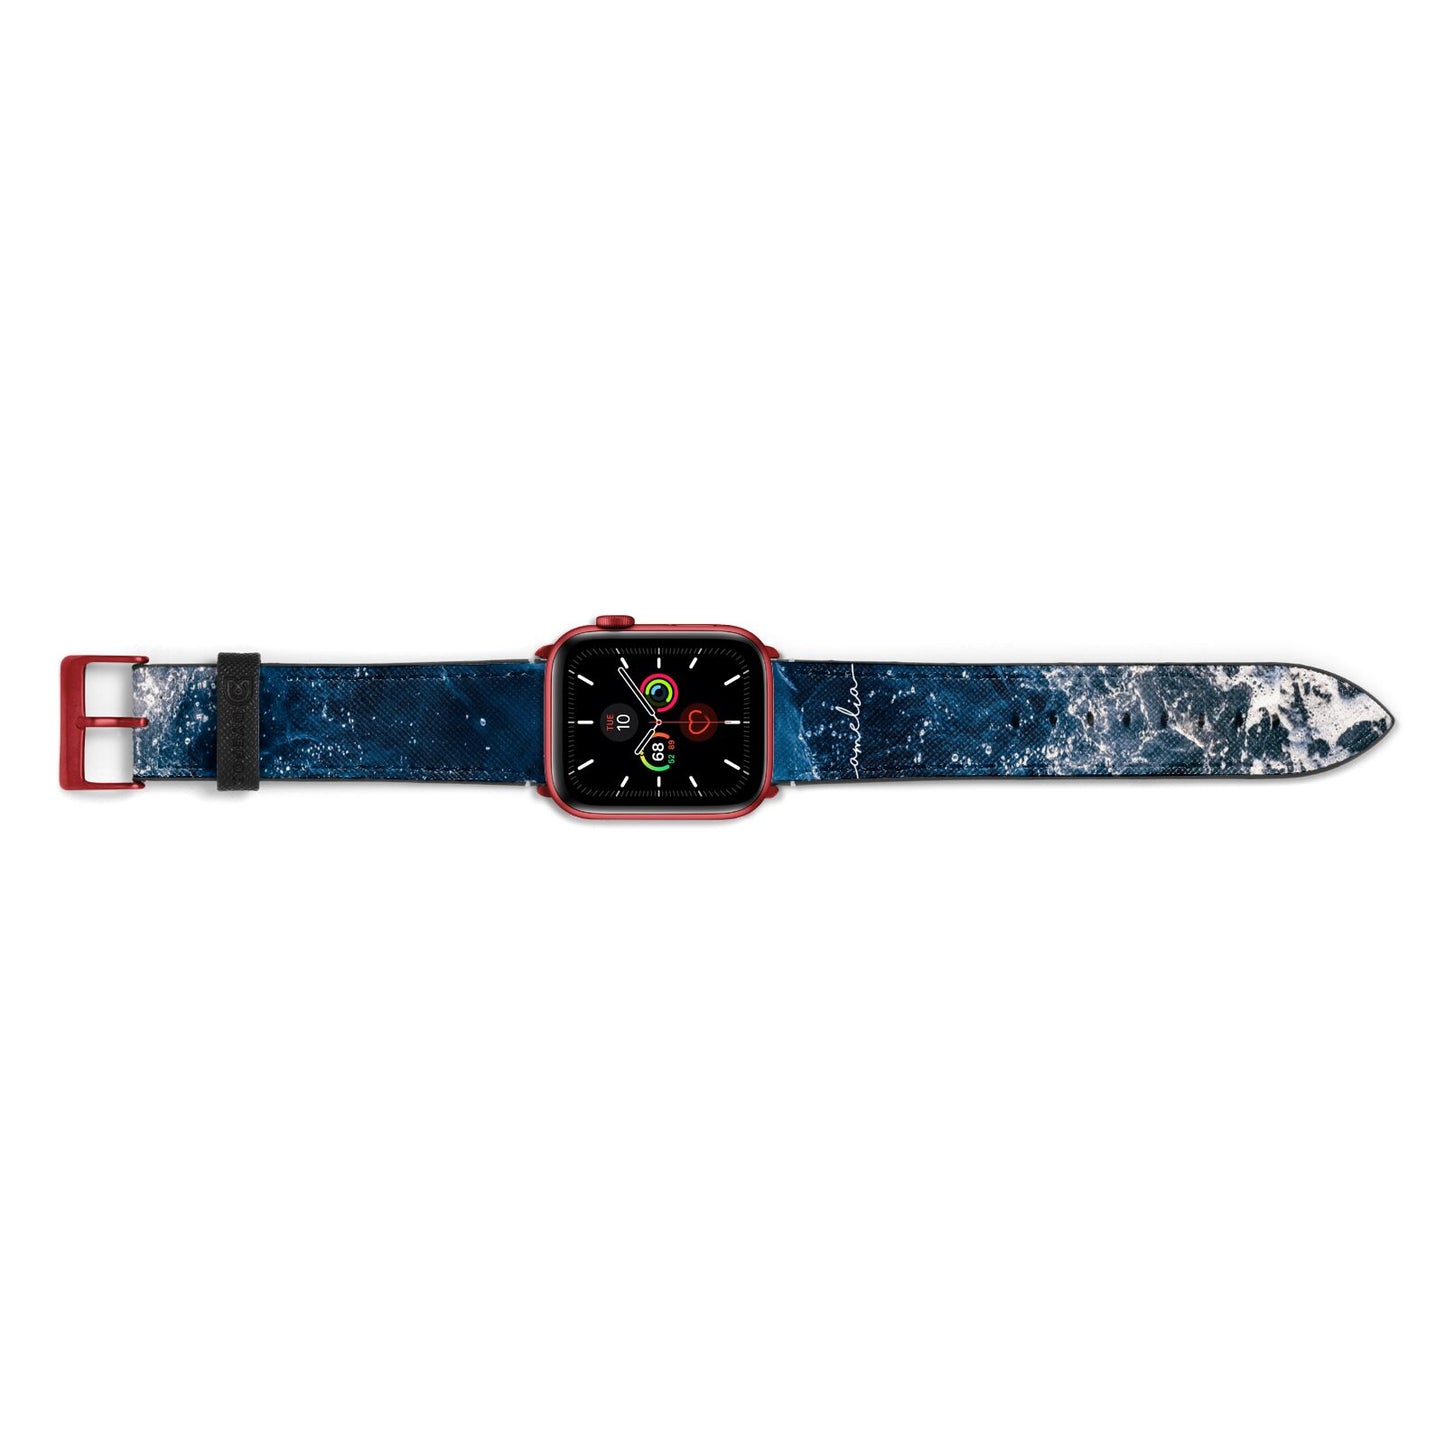 Custom Sea Apple Watch Strap Landscape Image Red Hardware